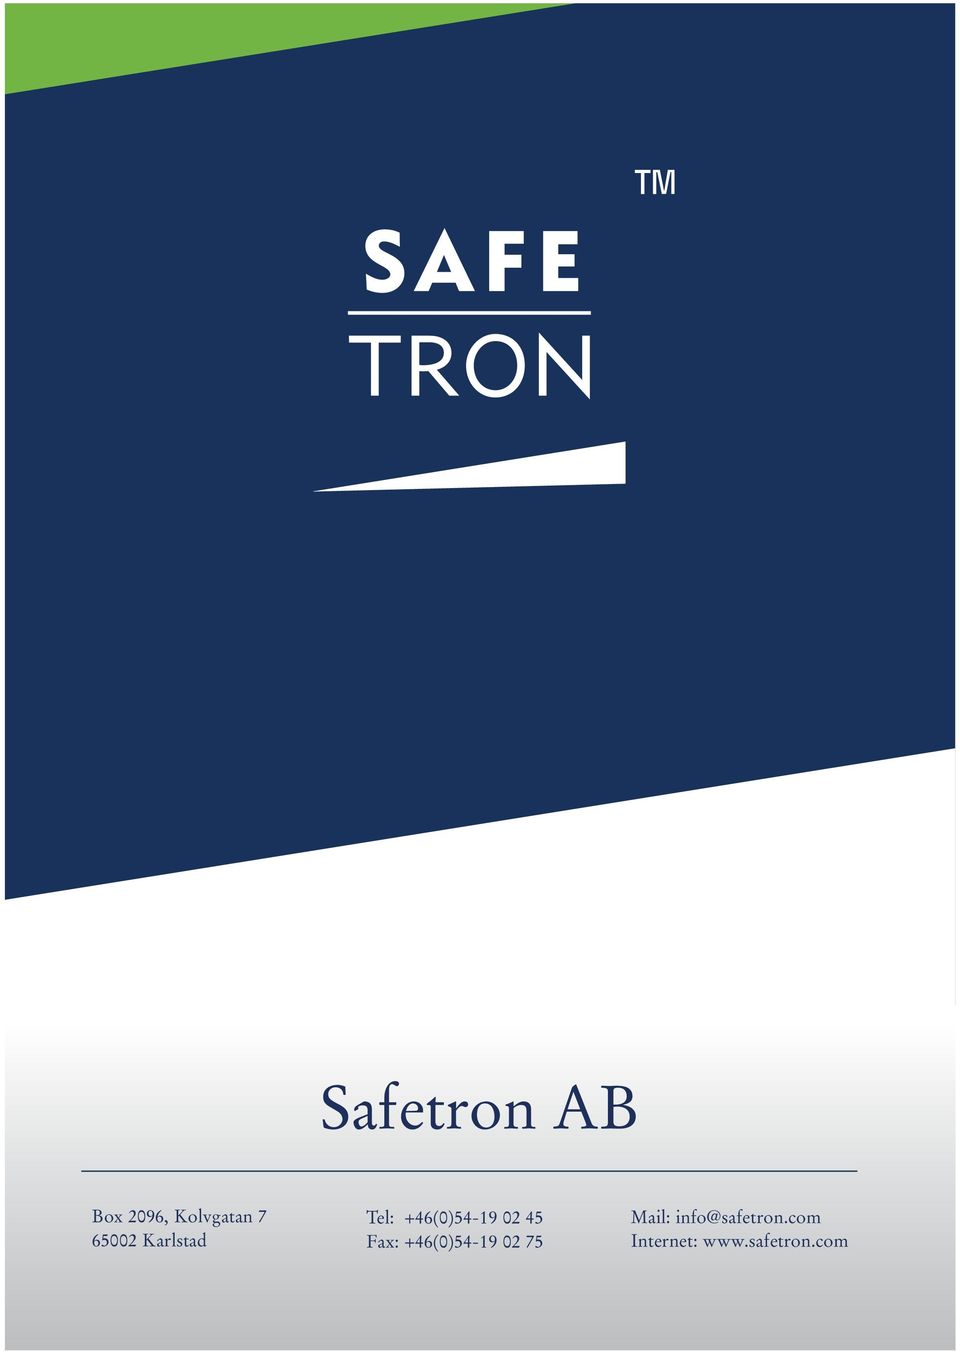 +(0)- 0 7 Mail: info@safetron.